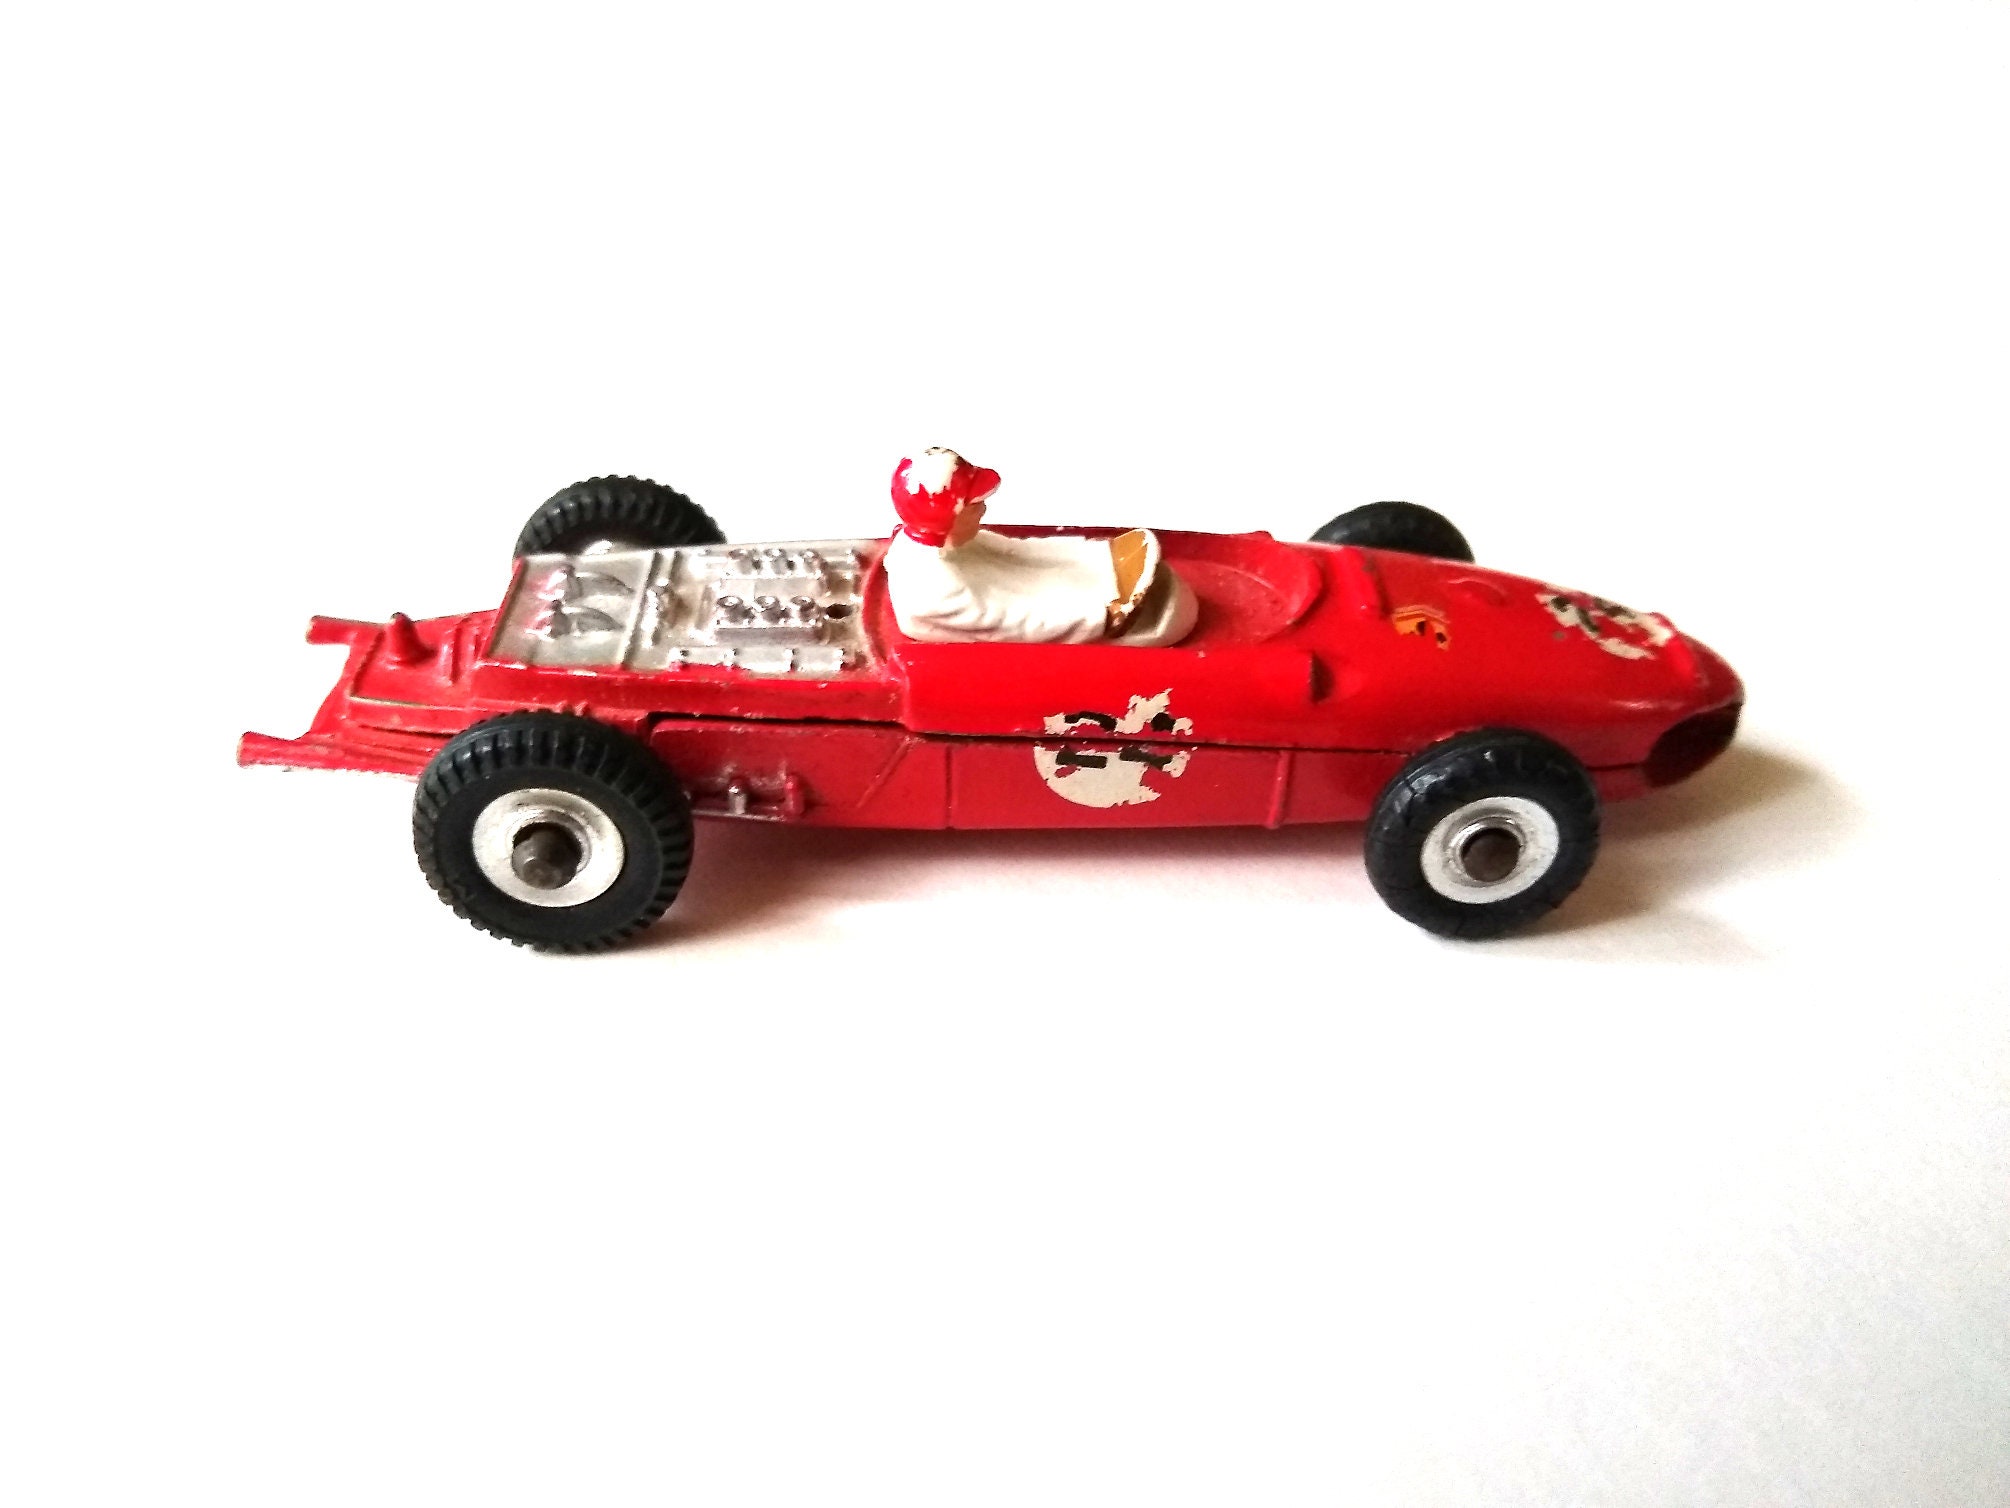 Rare Mid-century Dinky Toys Ferrari Racing Car 242 Made in England Meccano  Ltd, Has Racing Number 24 Verus the Standard 36, Scarce Version -   Singapore